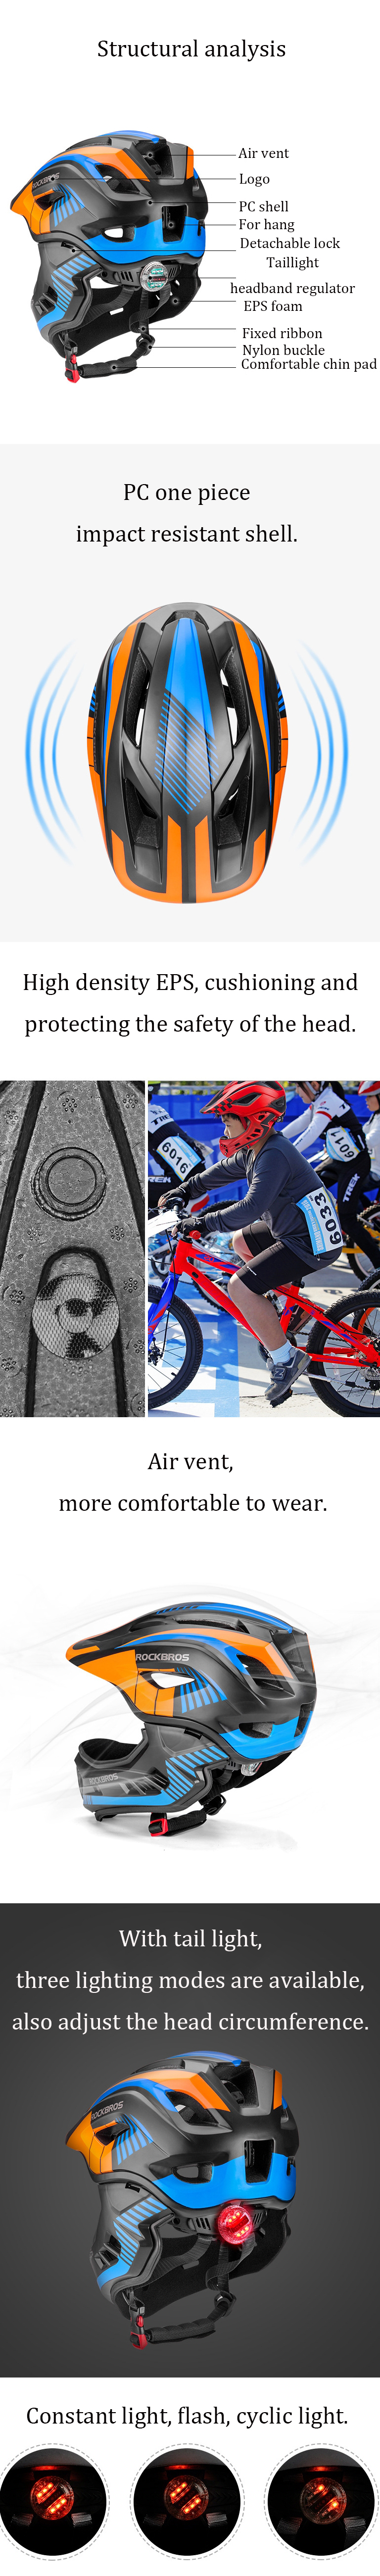 ROCKBROS-TT-32SBTG-3-Modes-Light-Removable-Kids-Helmet-Outdoor-Children-Cycling-Bicycle-Balance-Bike-1557422-3